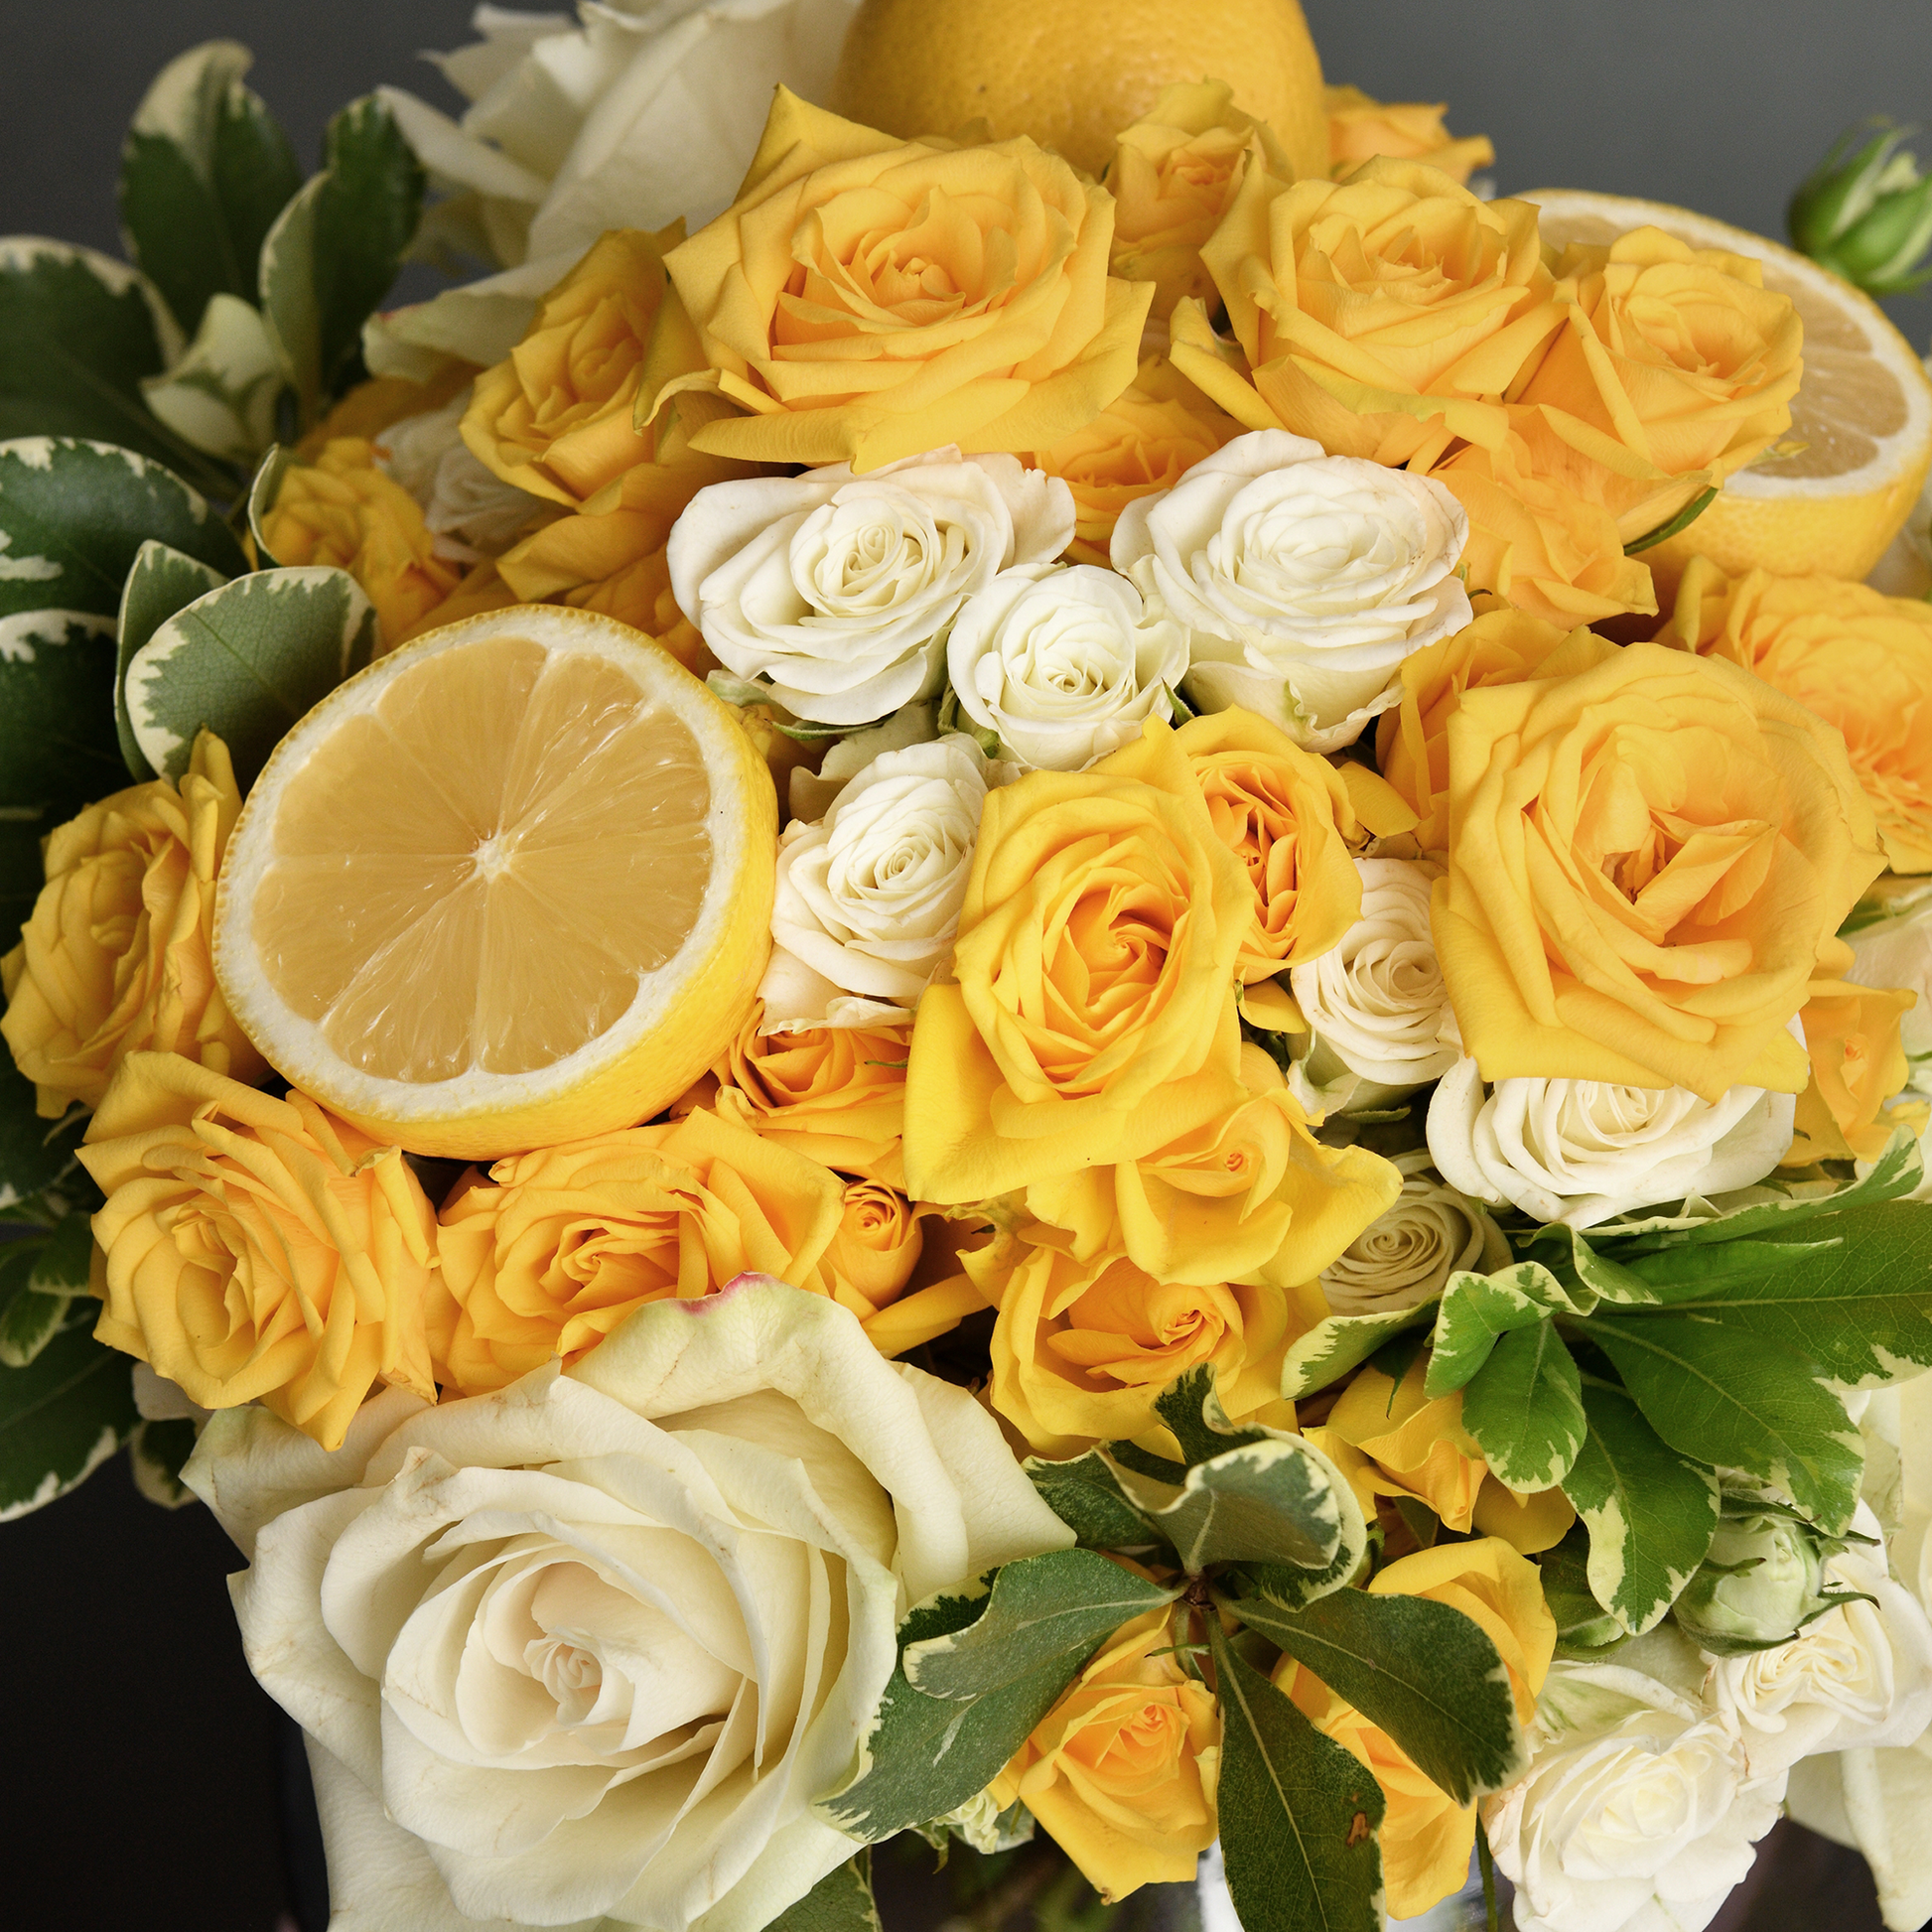 Yellow Roses, Cream Rose, & Lemon Vase